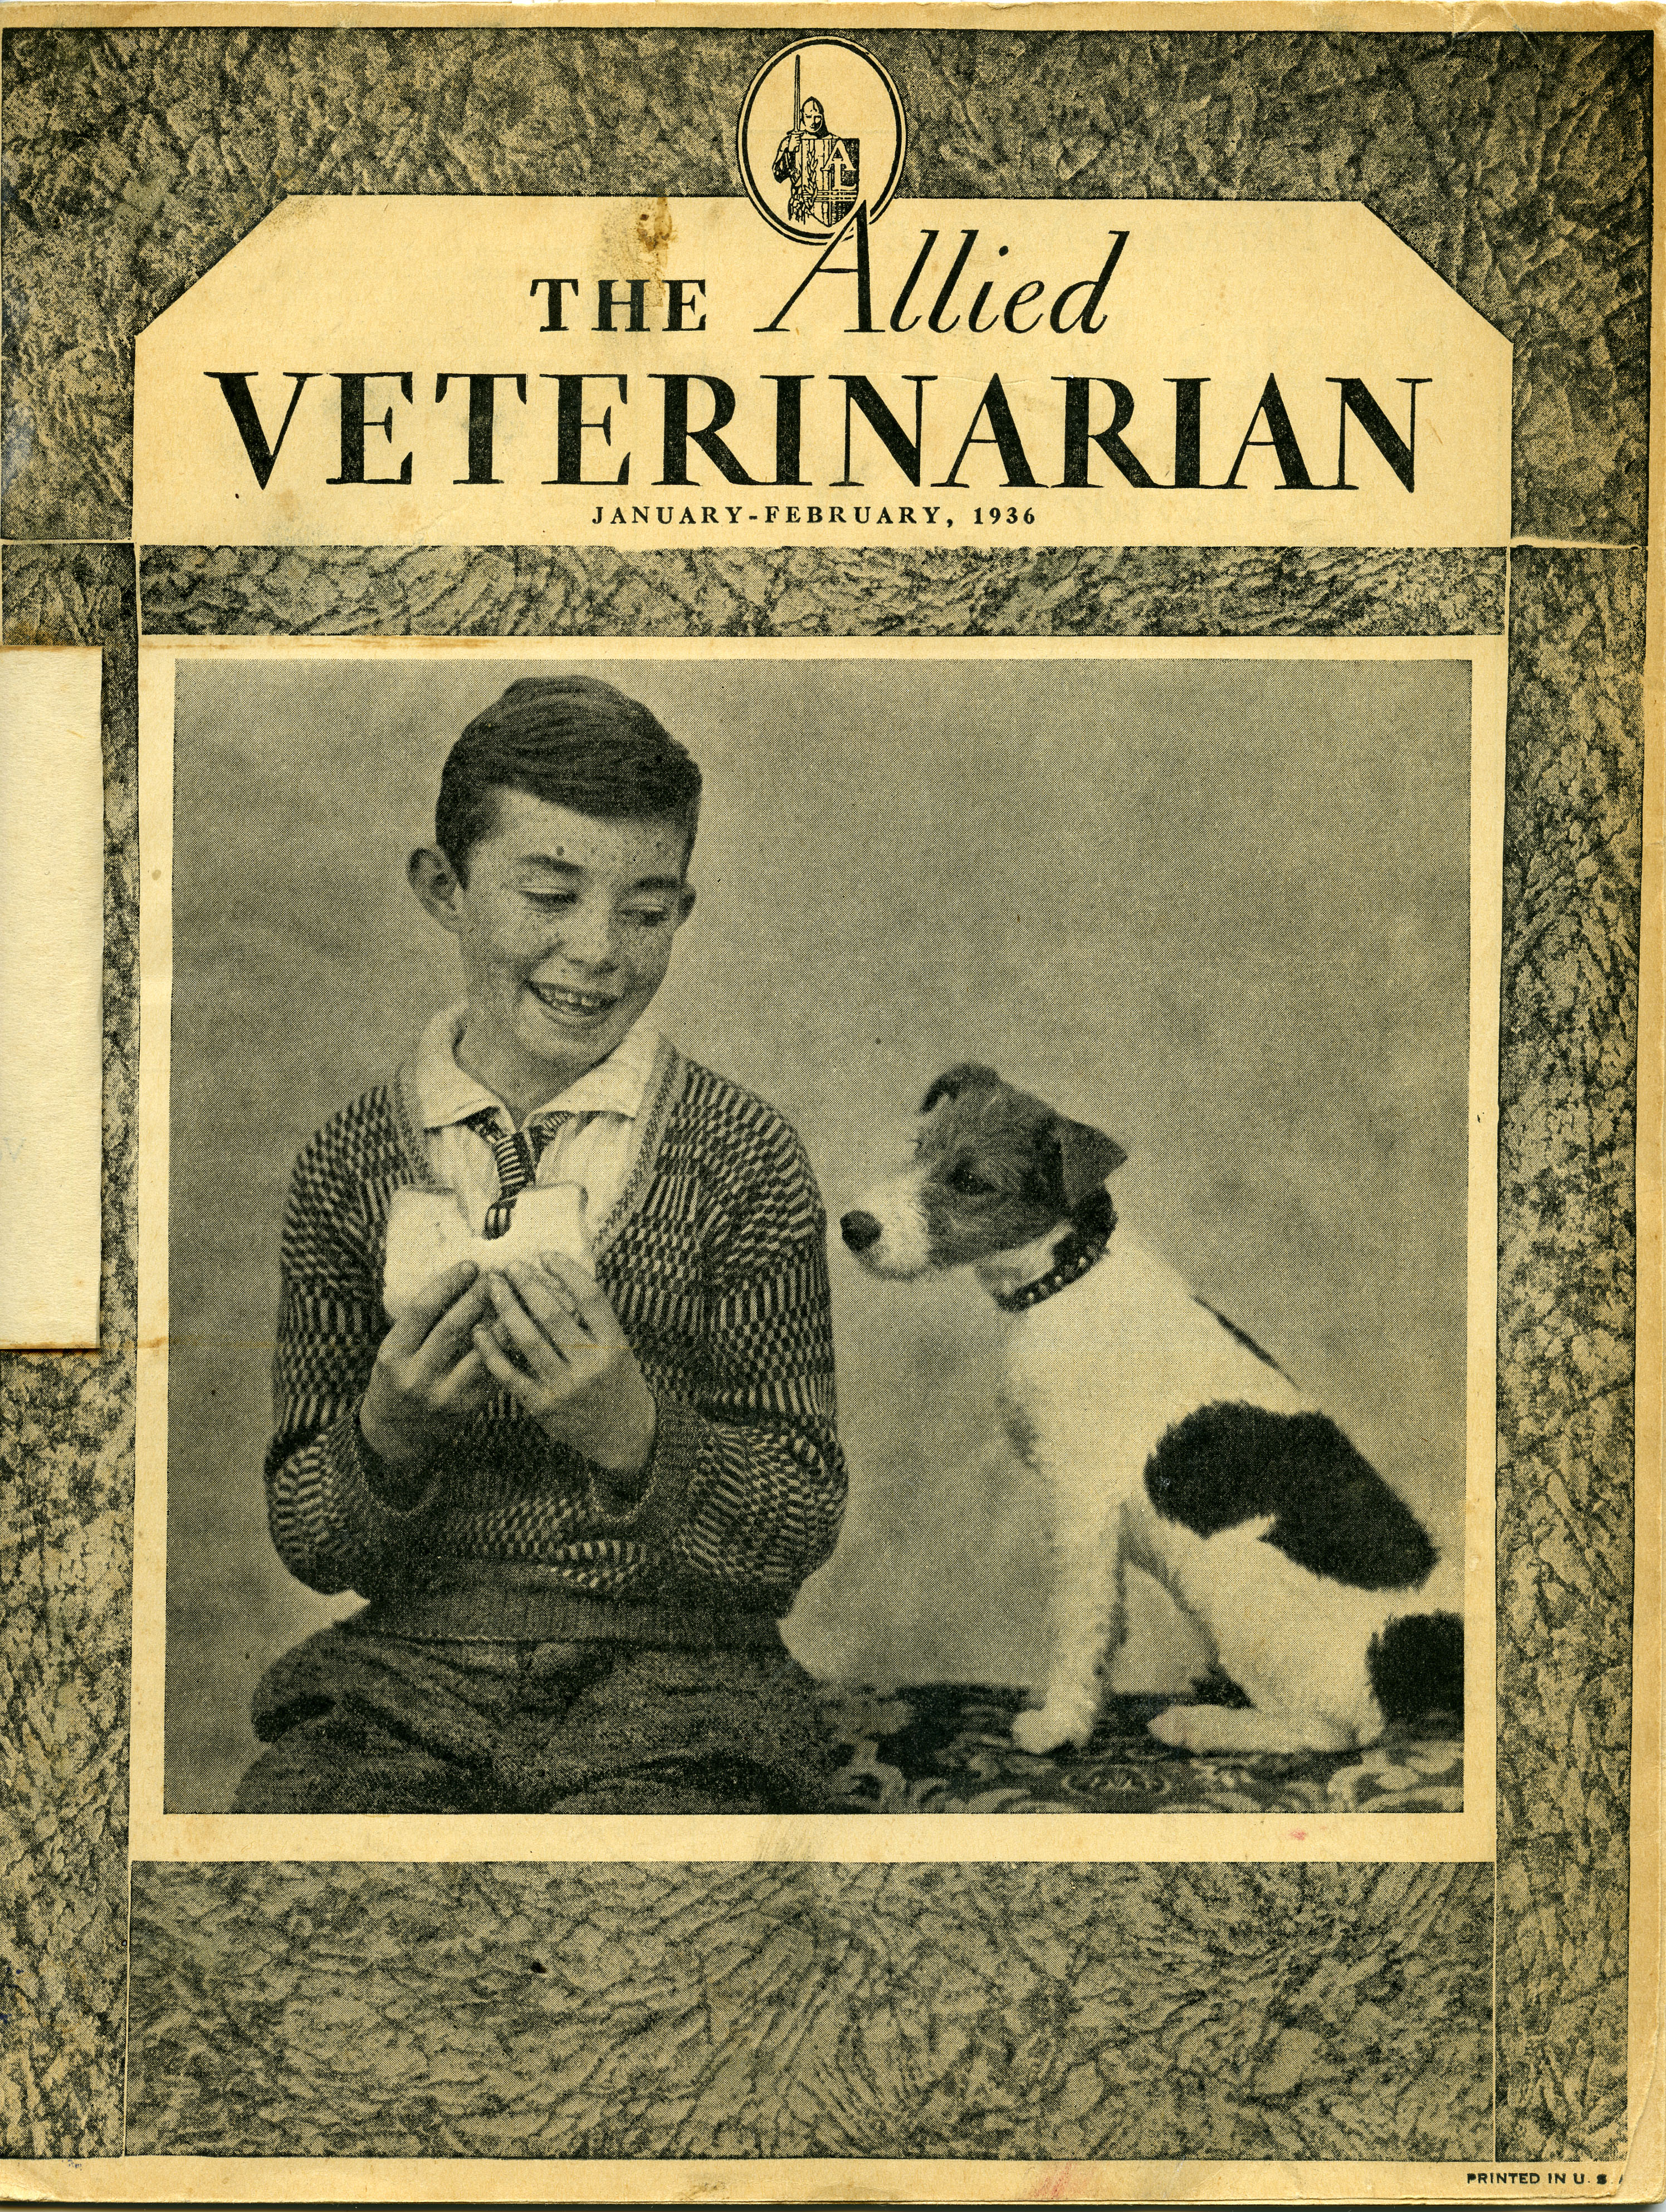 Allied Veterinarian journal